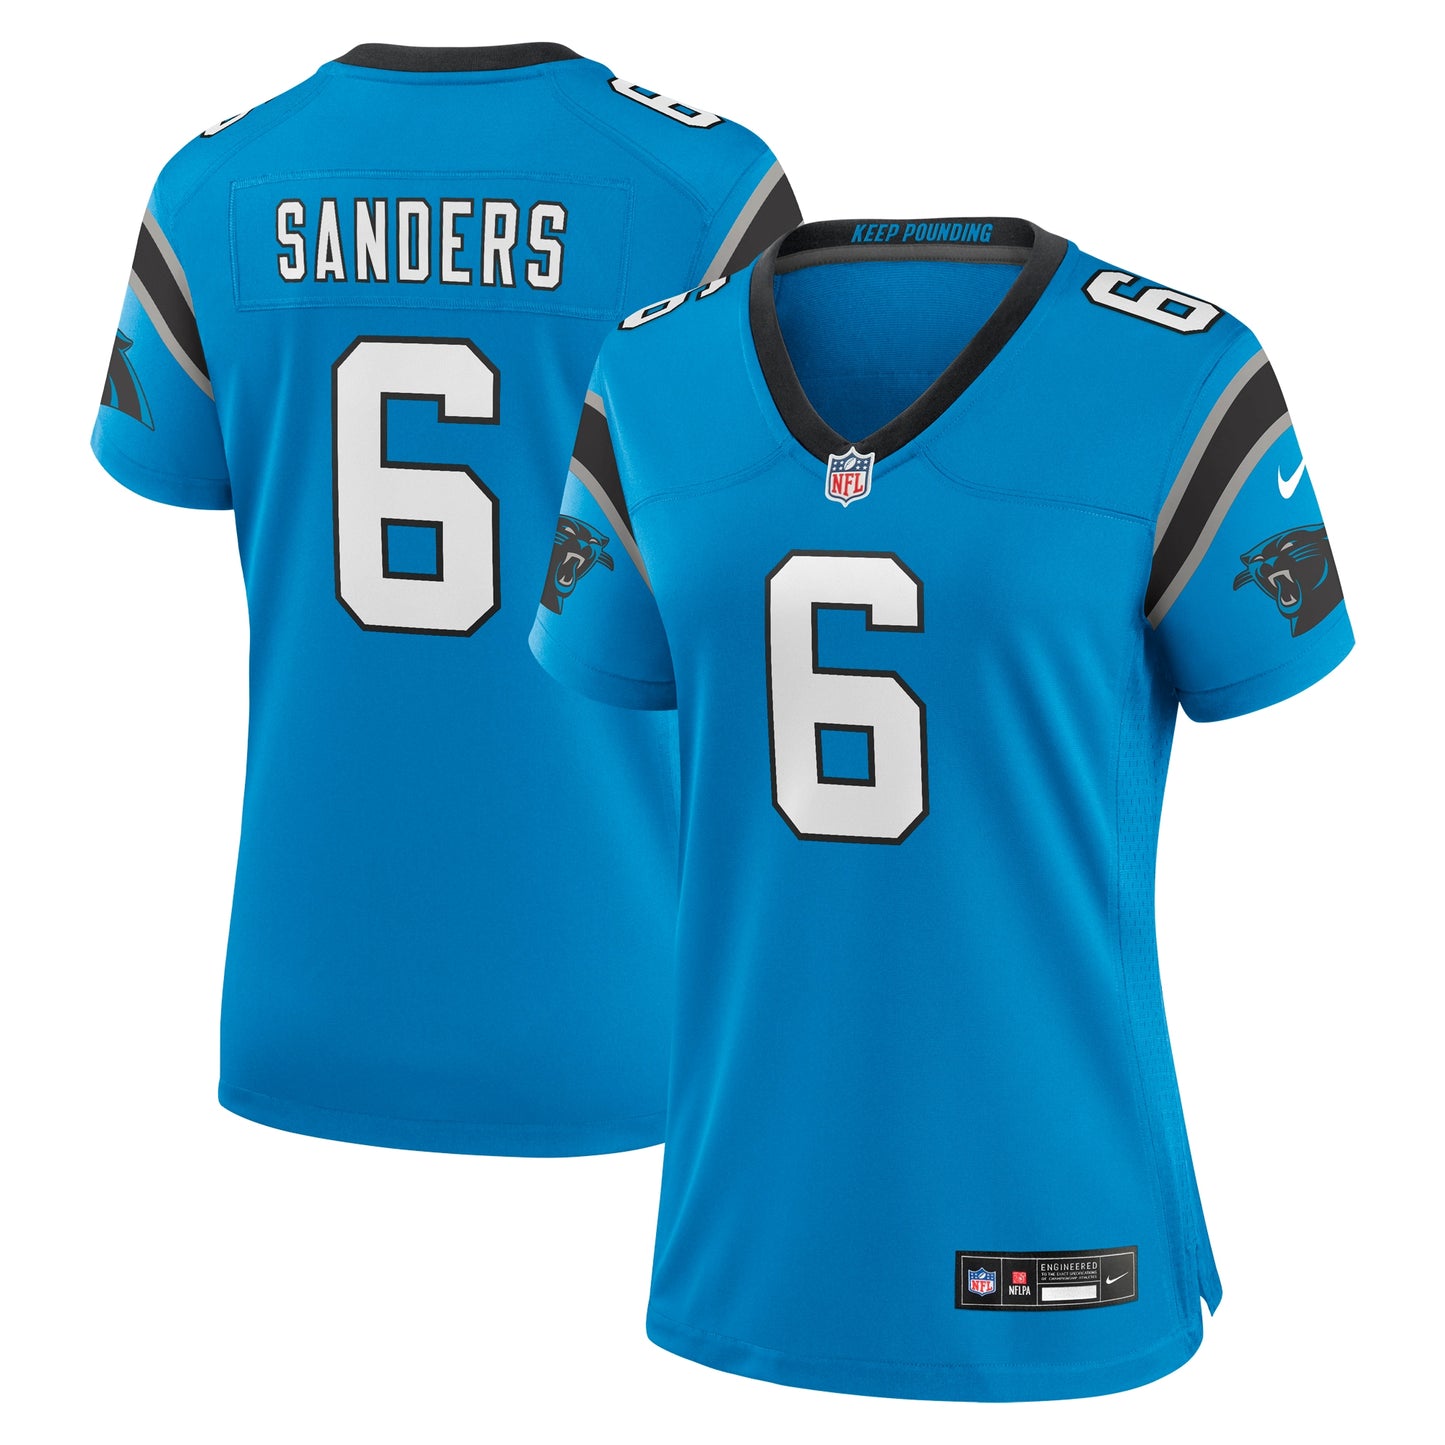 Miles Sanders Carolina Panthers Nike Women's Team Game Jersey - Blue